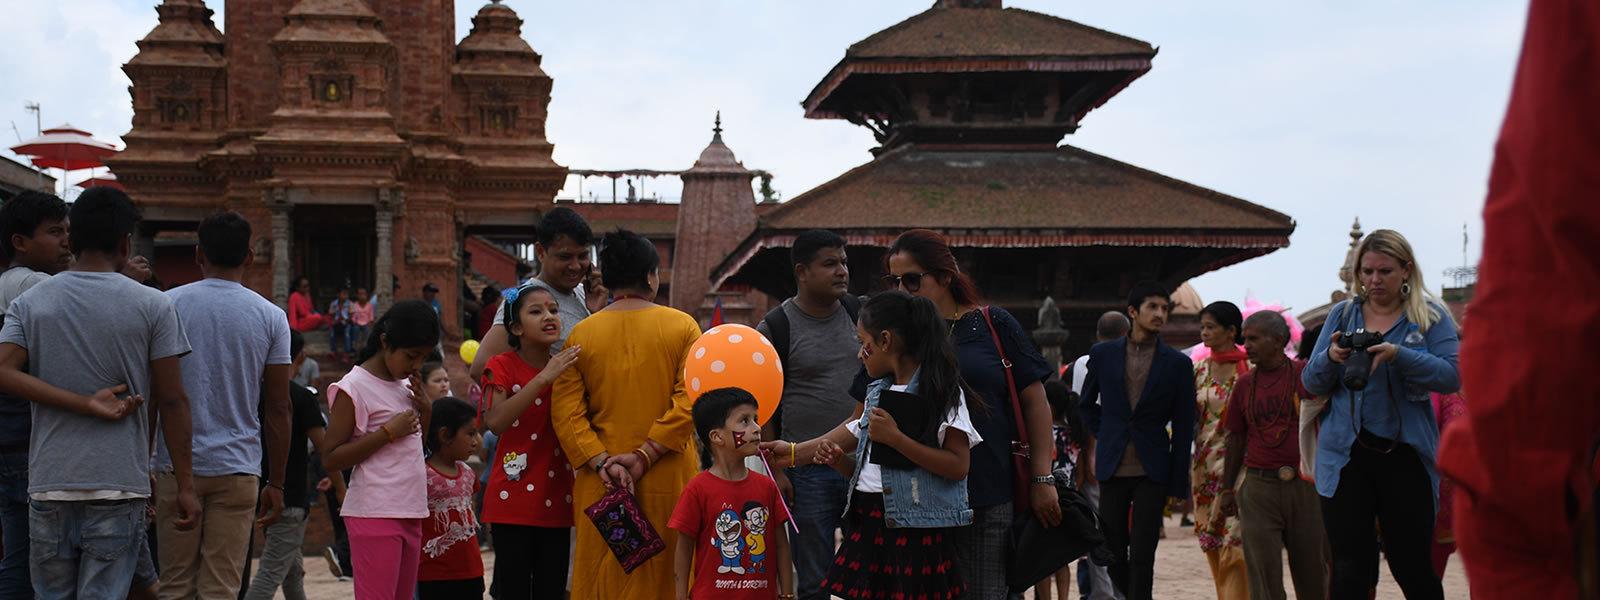 bhaktapur-durbar-square-world-heritage-sites-in-nepal